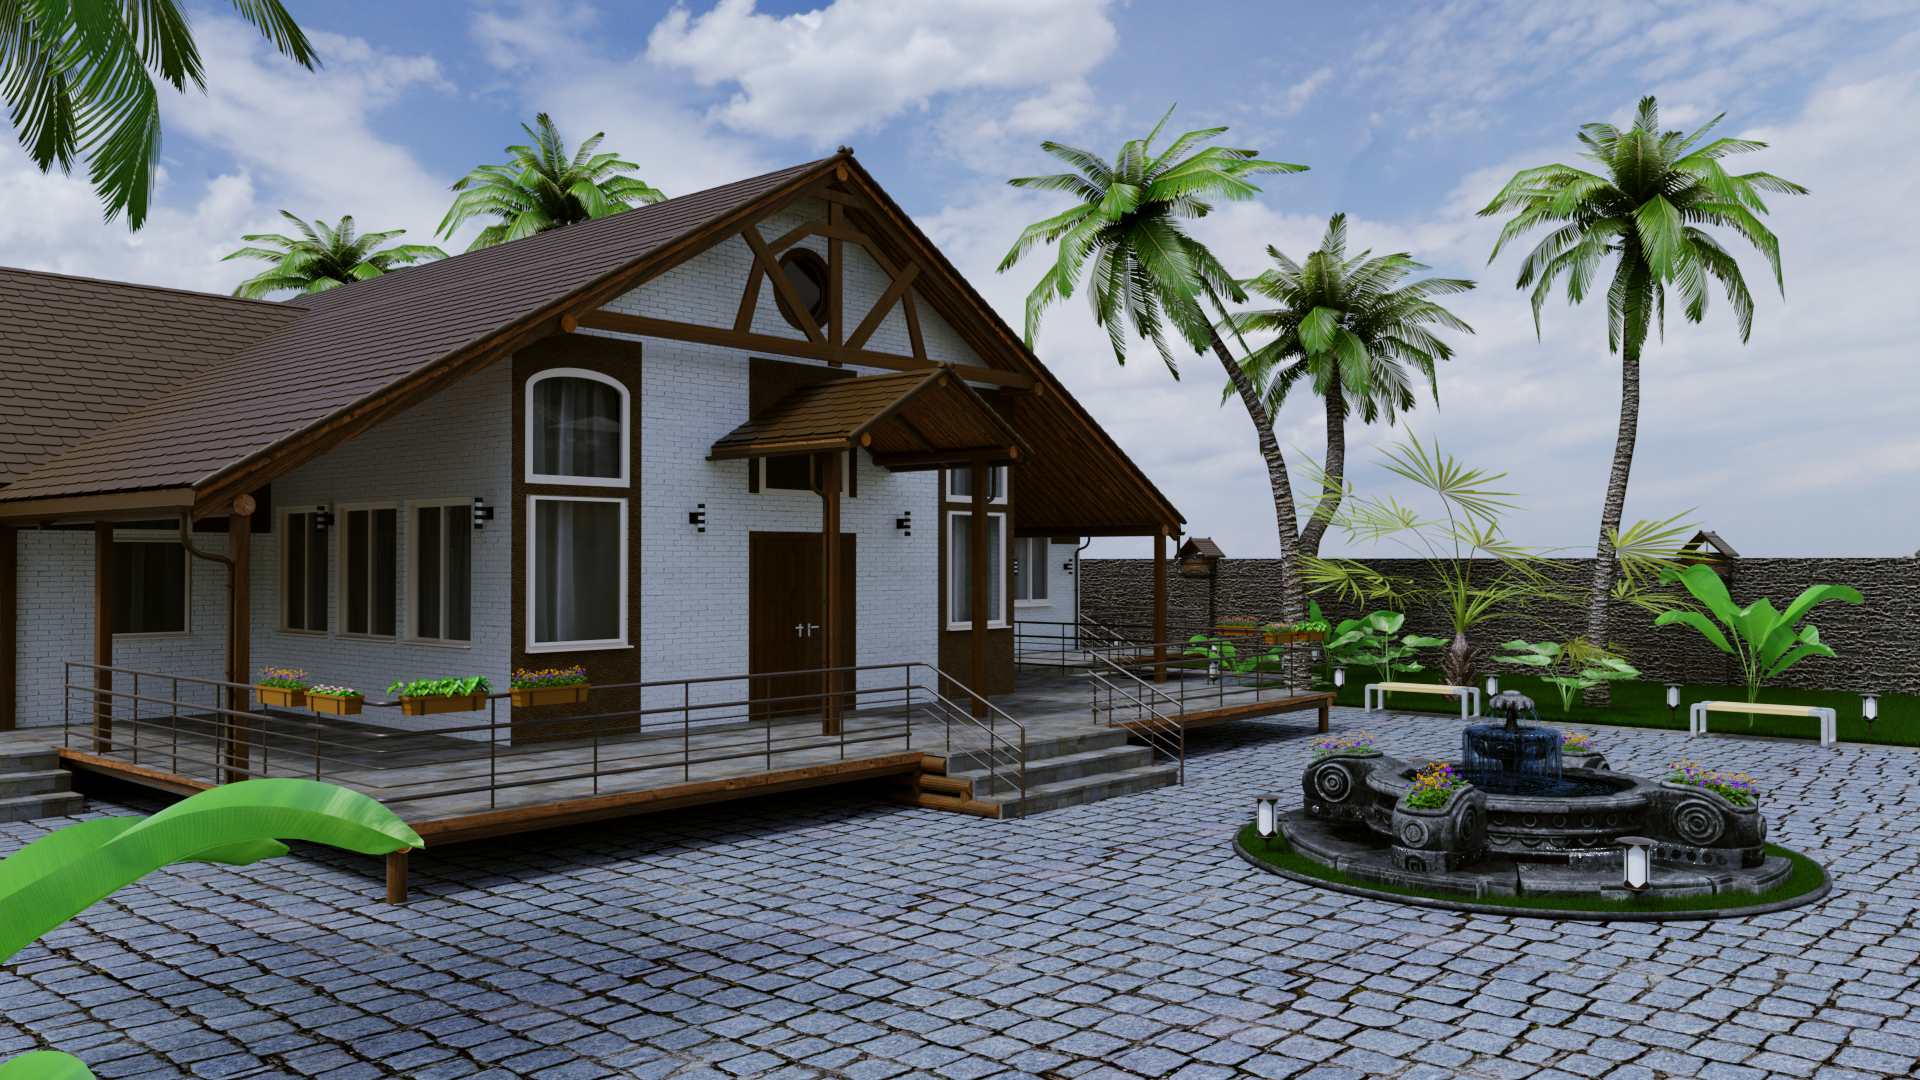 house in Blender cycles render image